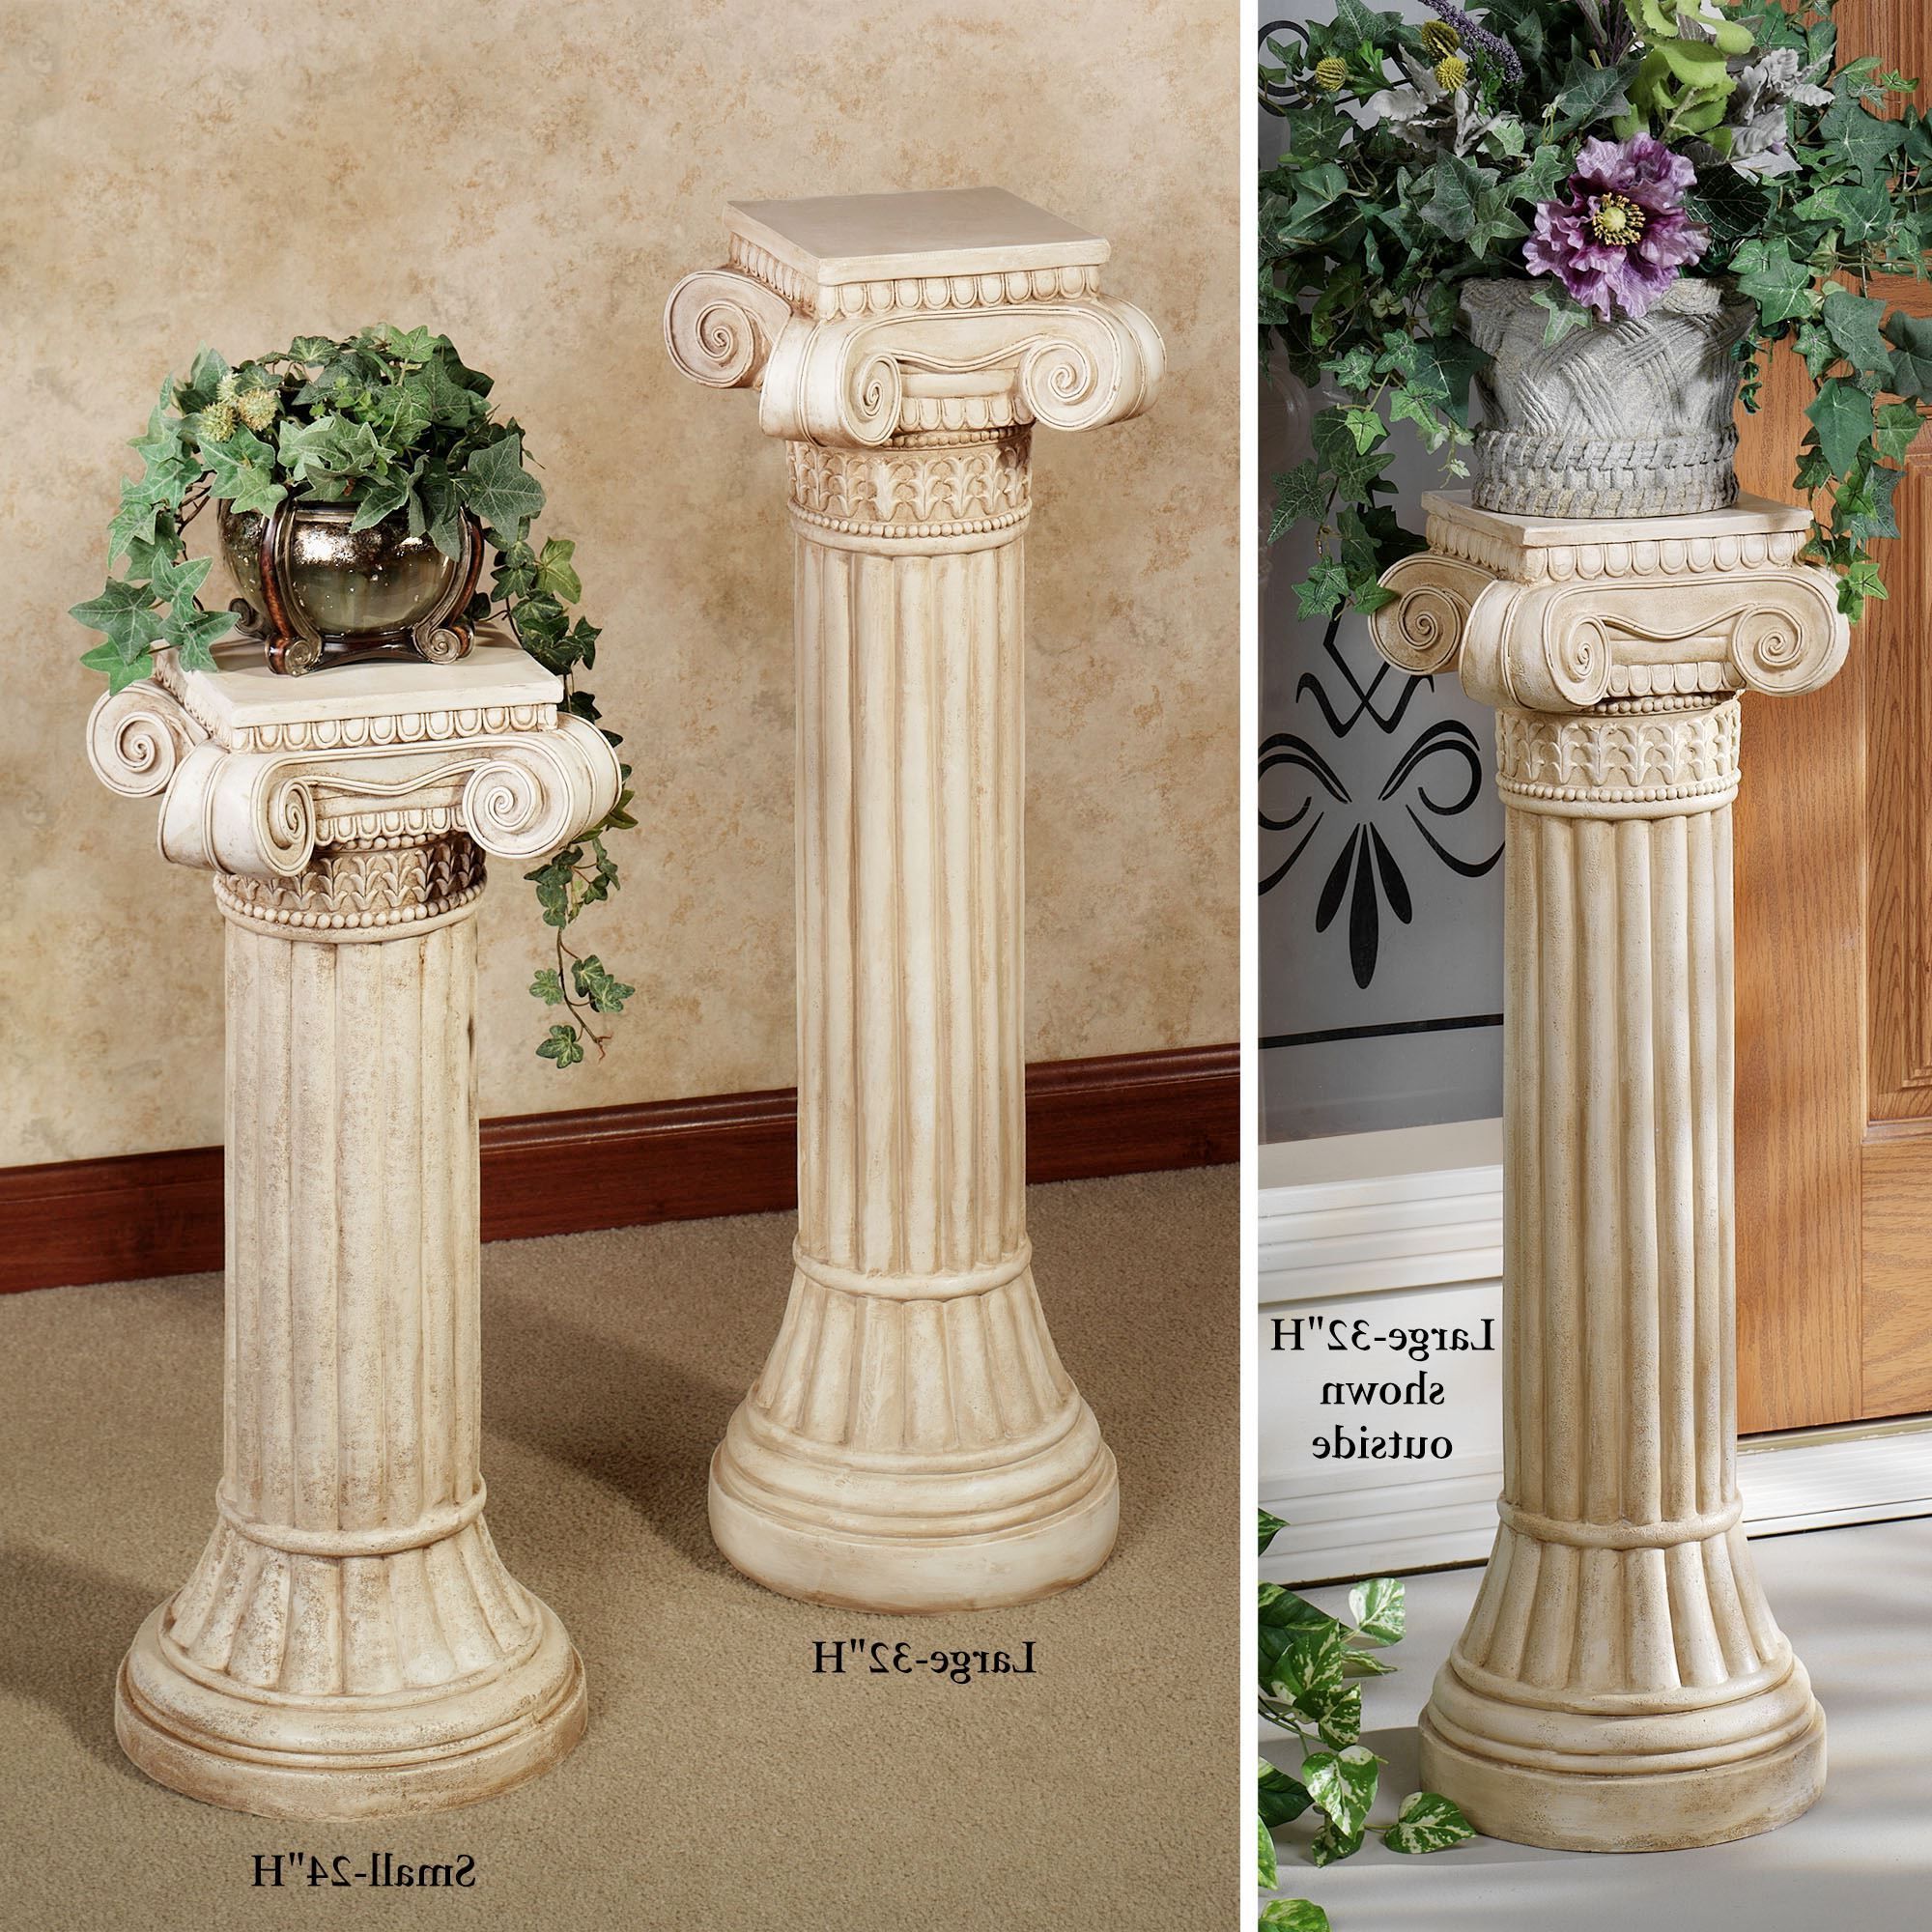 Pillar Plant Stands Regarding Newest 49 Columns, Pedestals, Plant Stands Ideas (View 15 of 15)